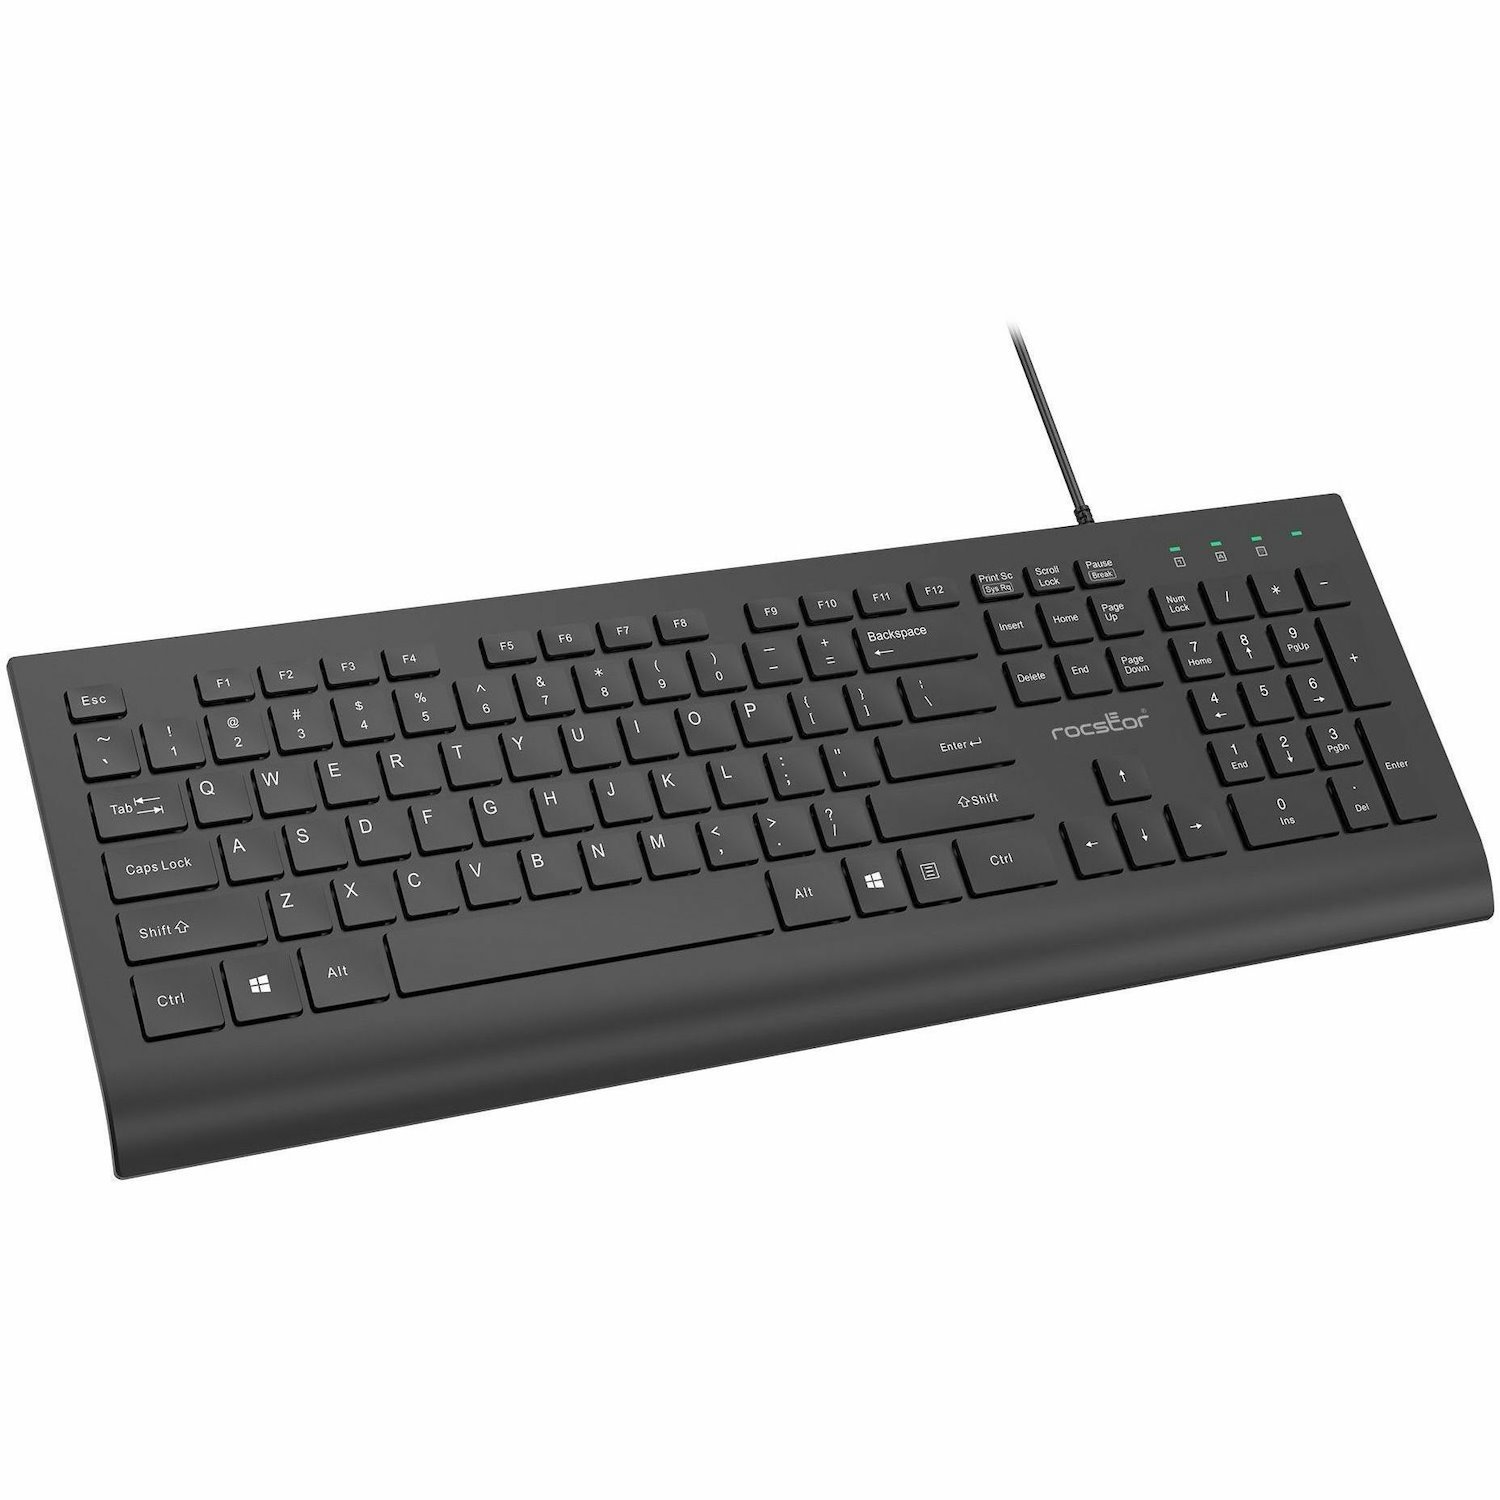 Rocstor Premium K10 USB Wired Keyboard - 104 Key Function